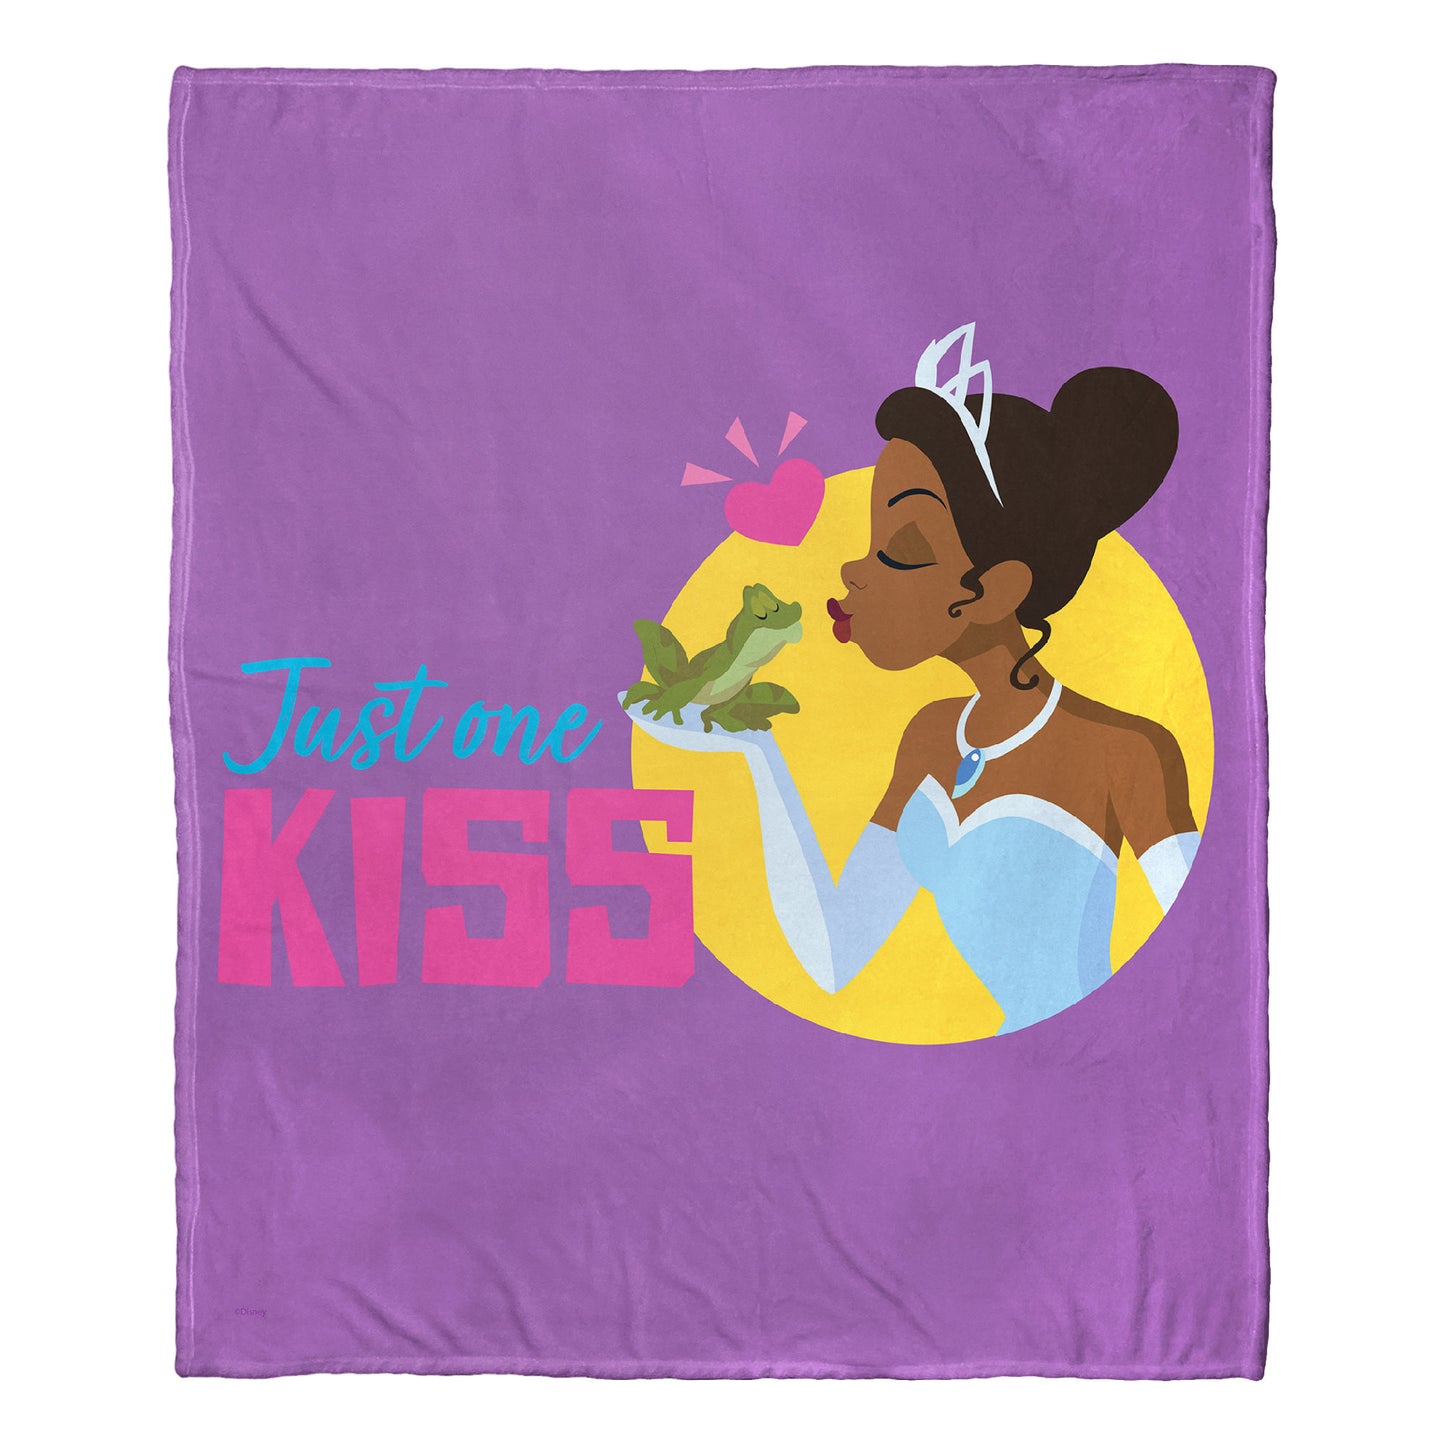 Disney Princesses "One Kiss" Throw Blanket 50"x60"